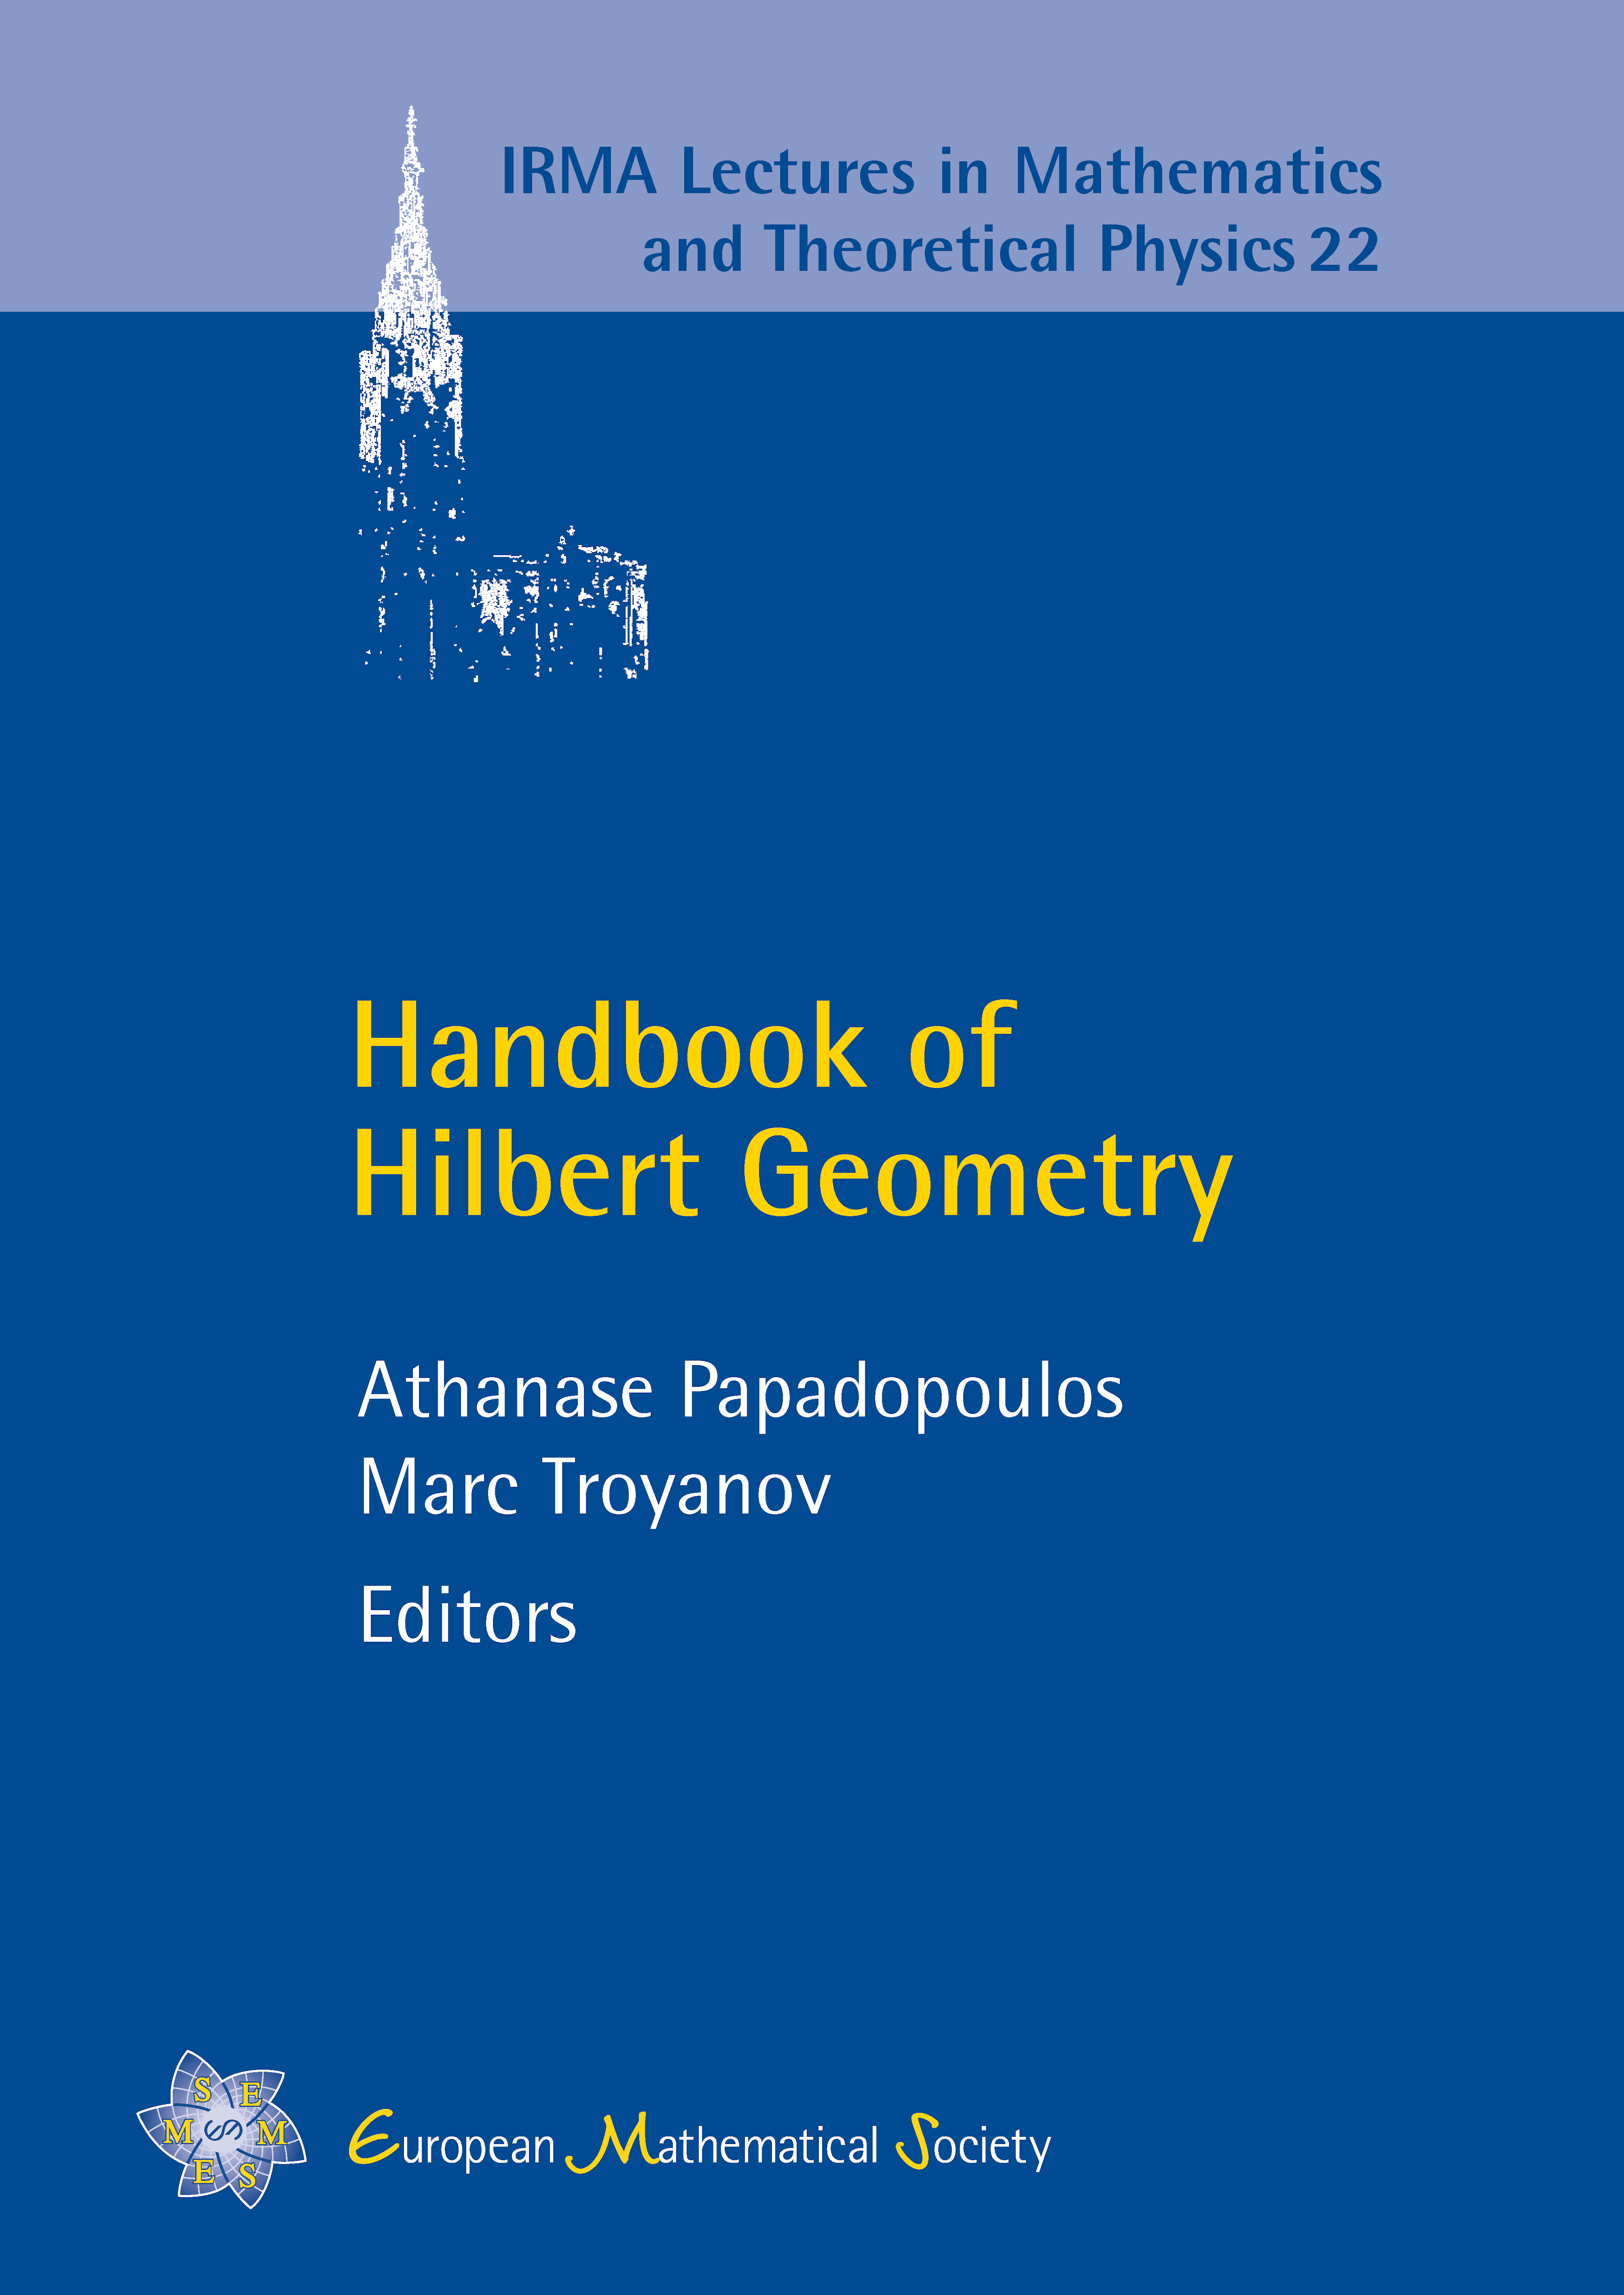 Characterizations of hyperbolic geometry among Hilbert geometries cover